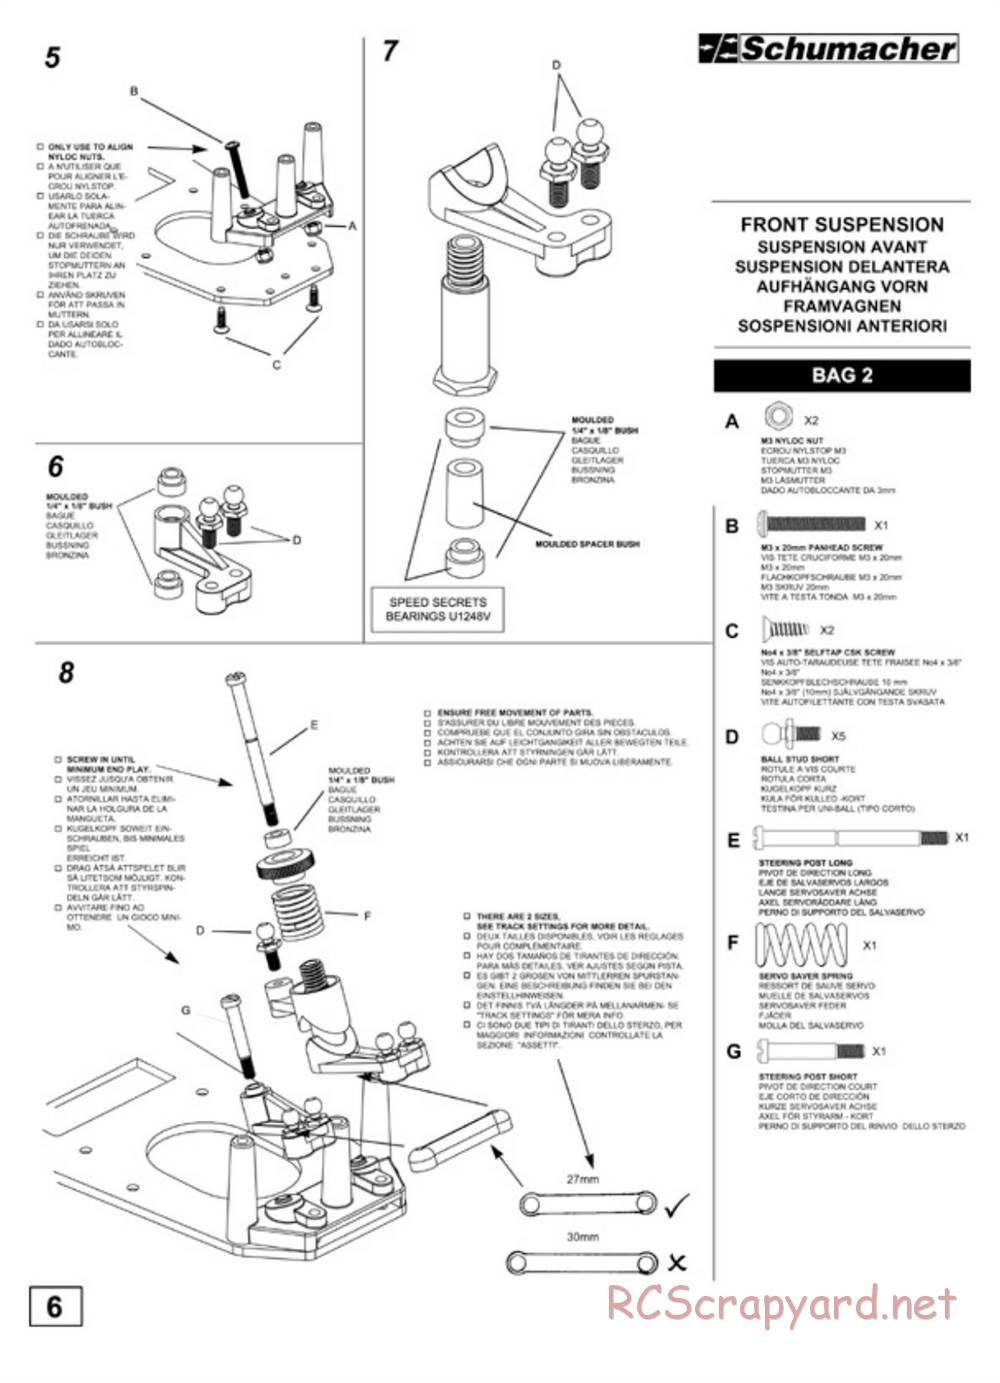 Schumacher - Fireblade Evo - Manual - Page 8